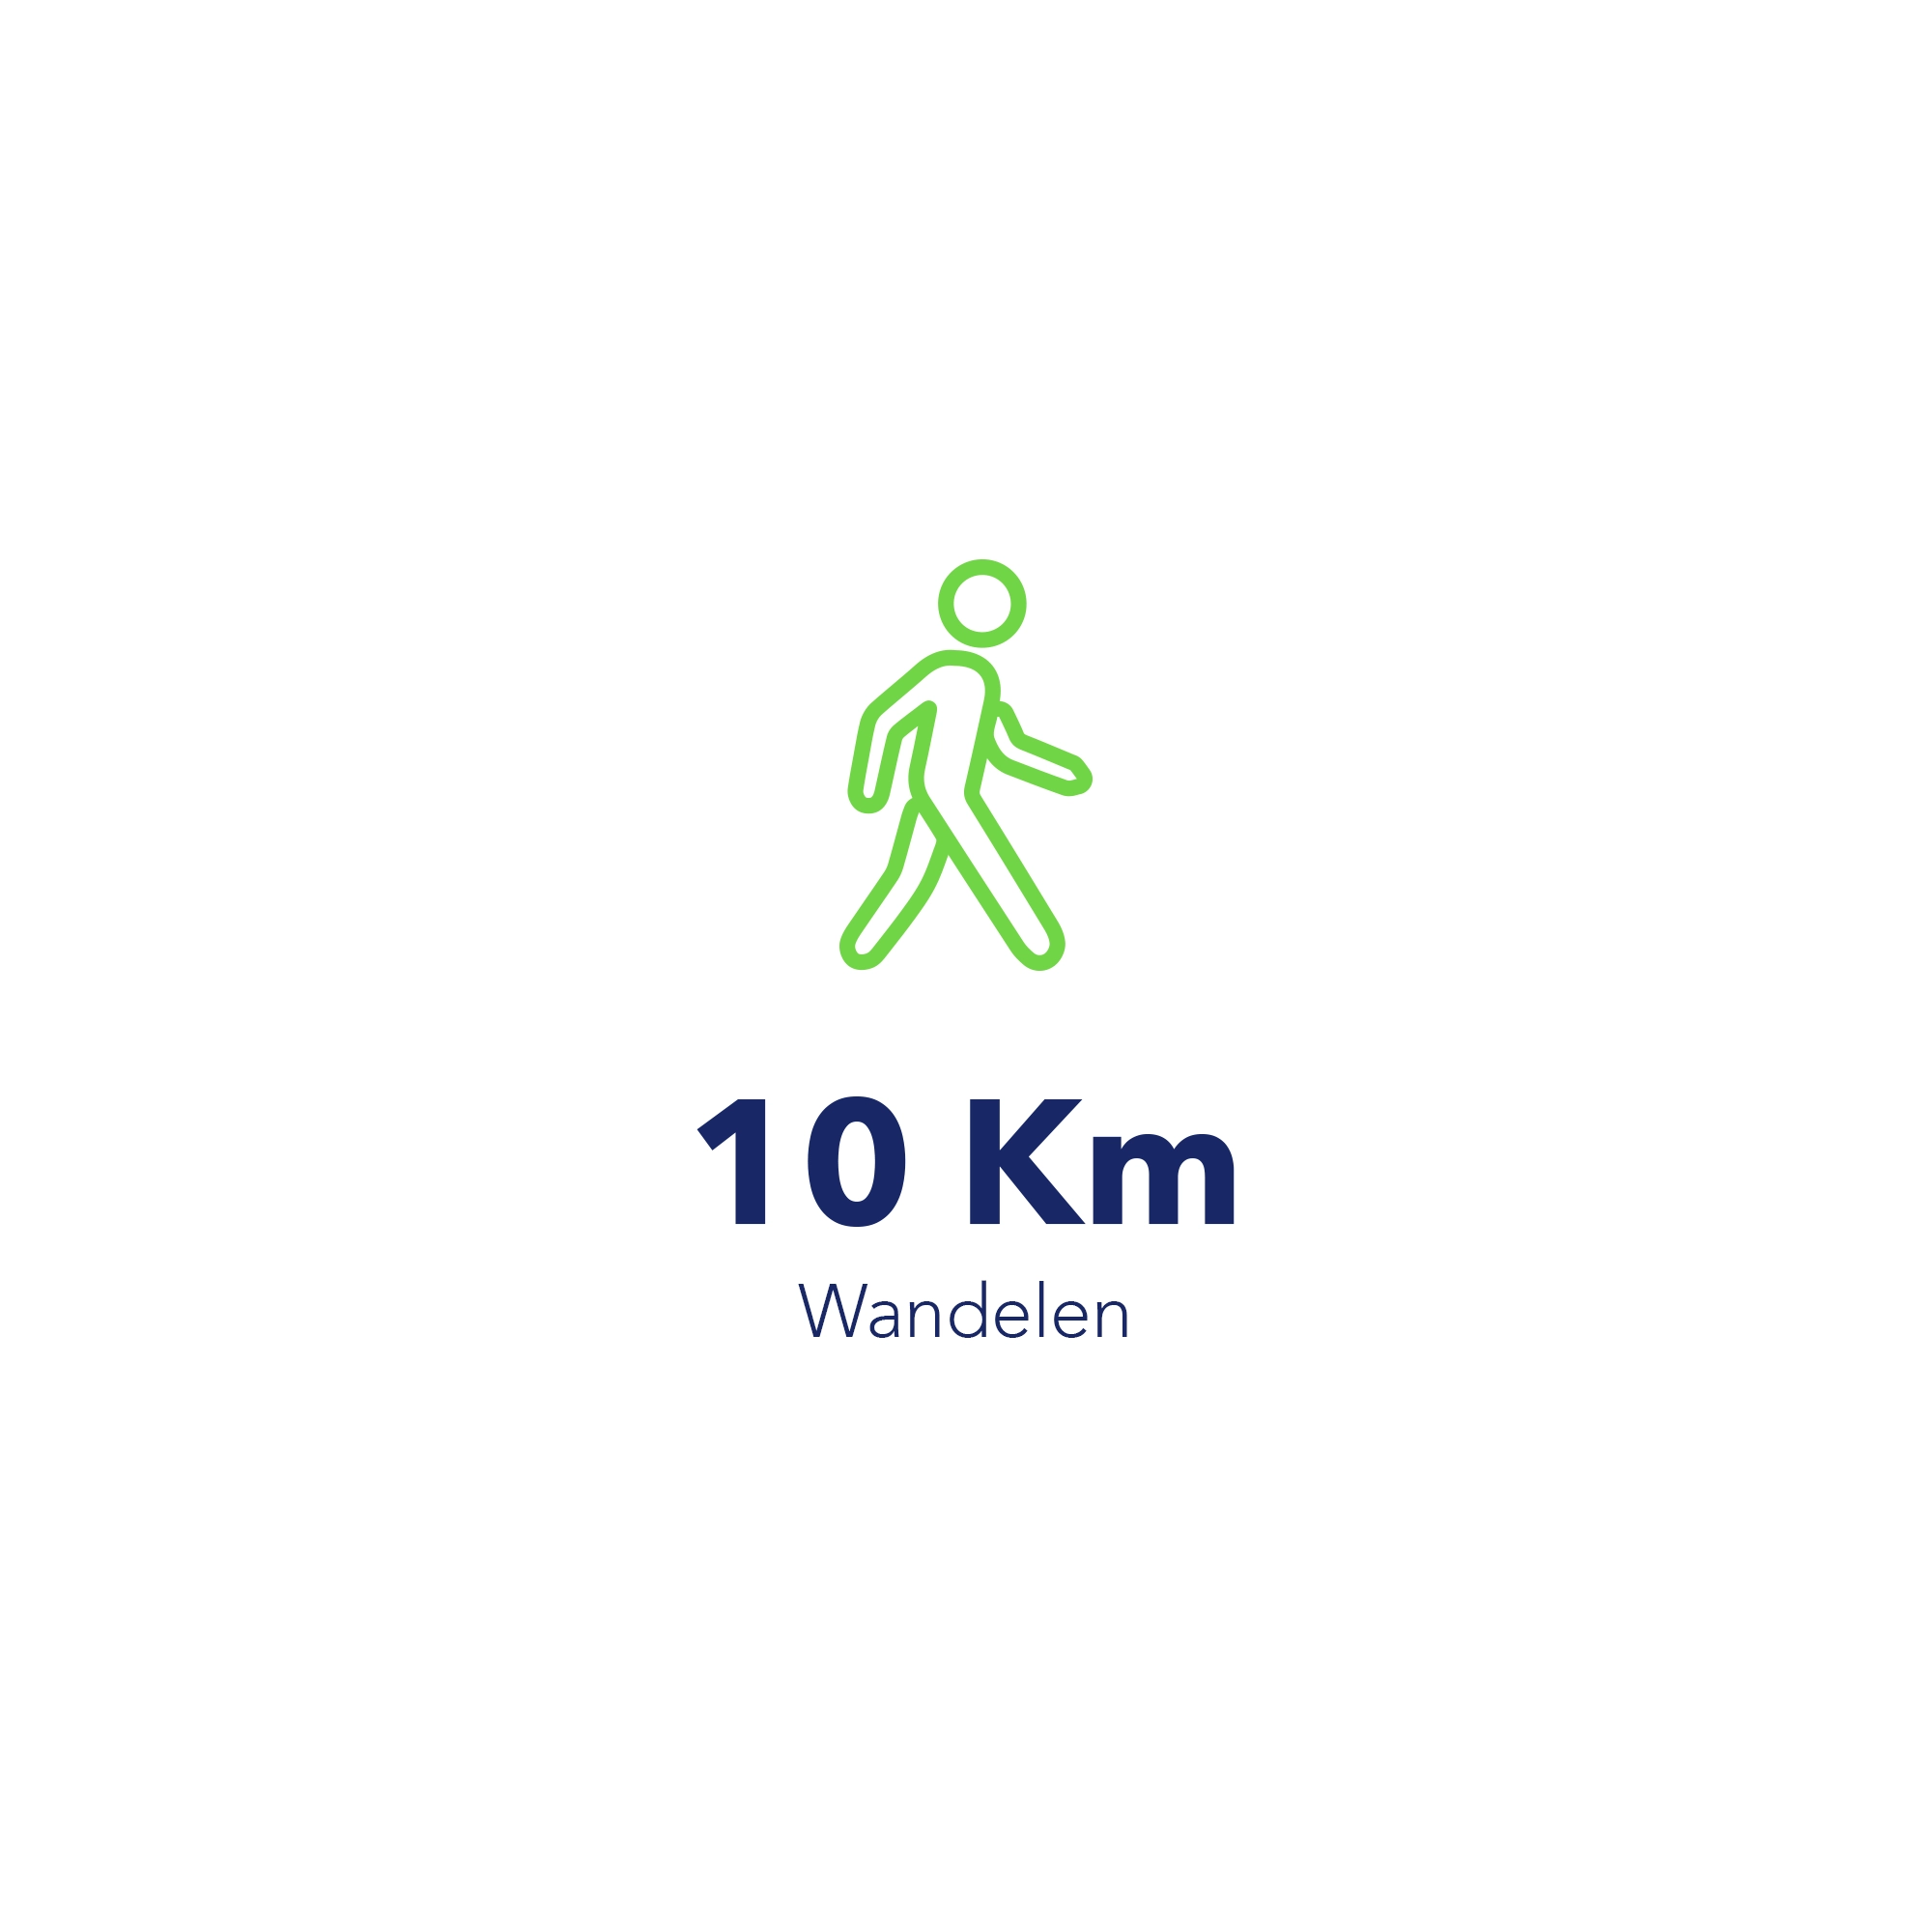 10km wandelen